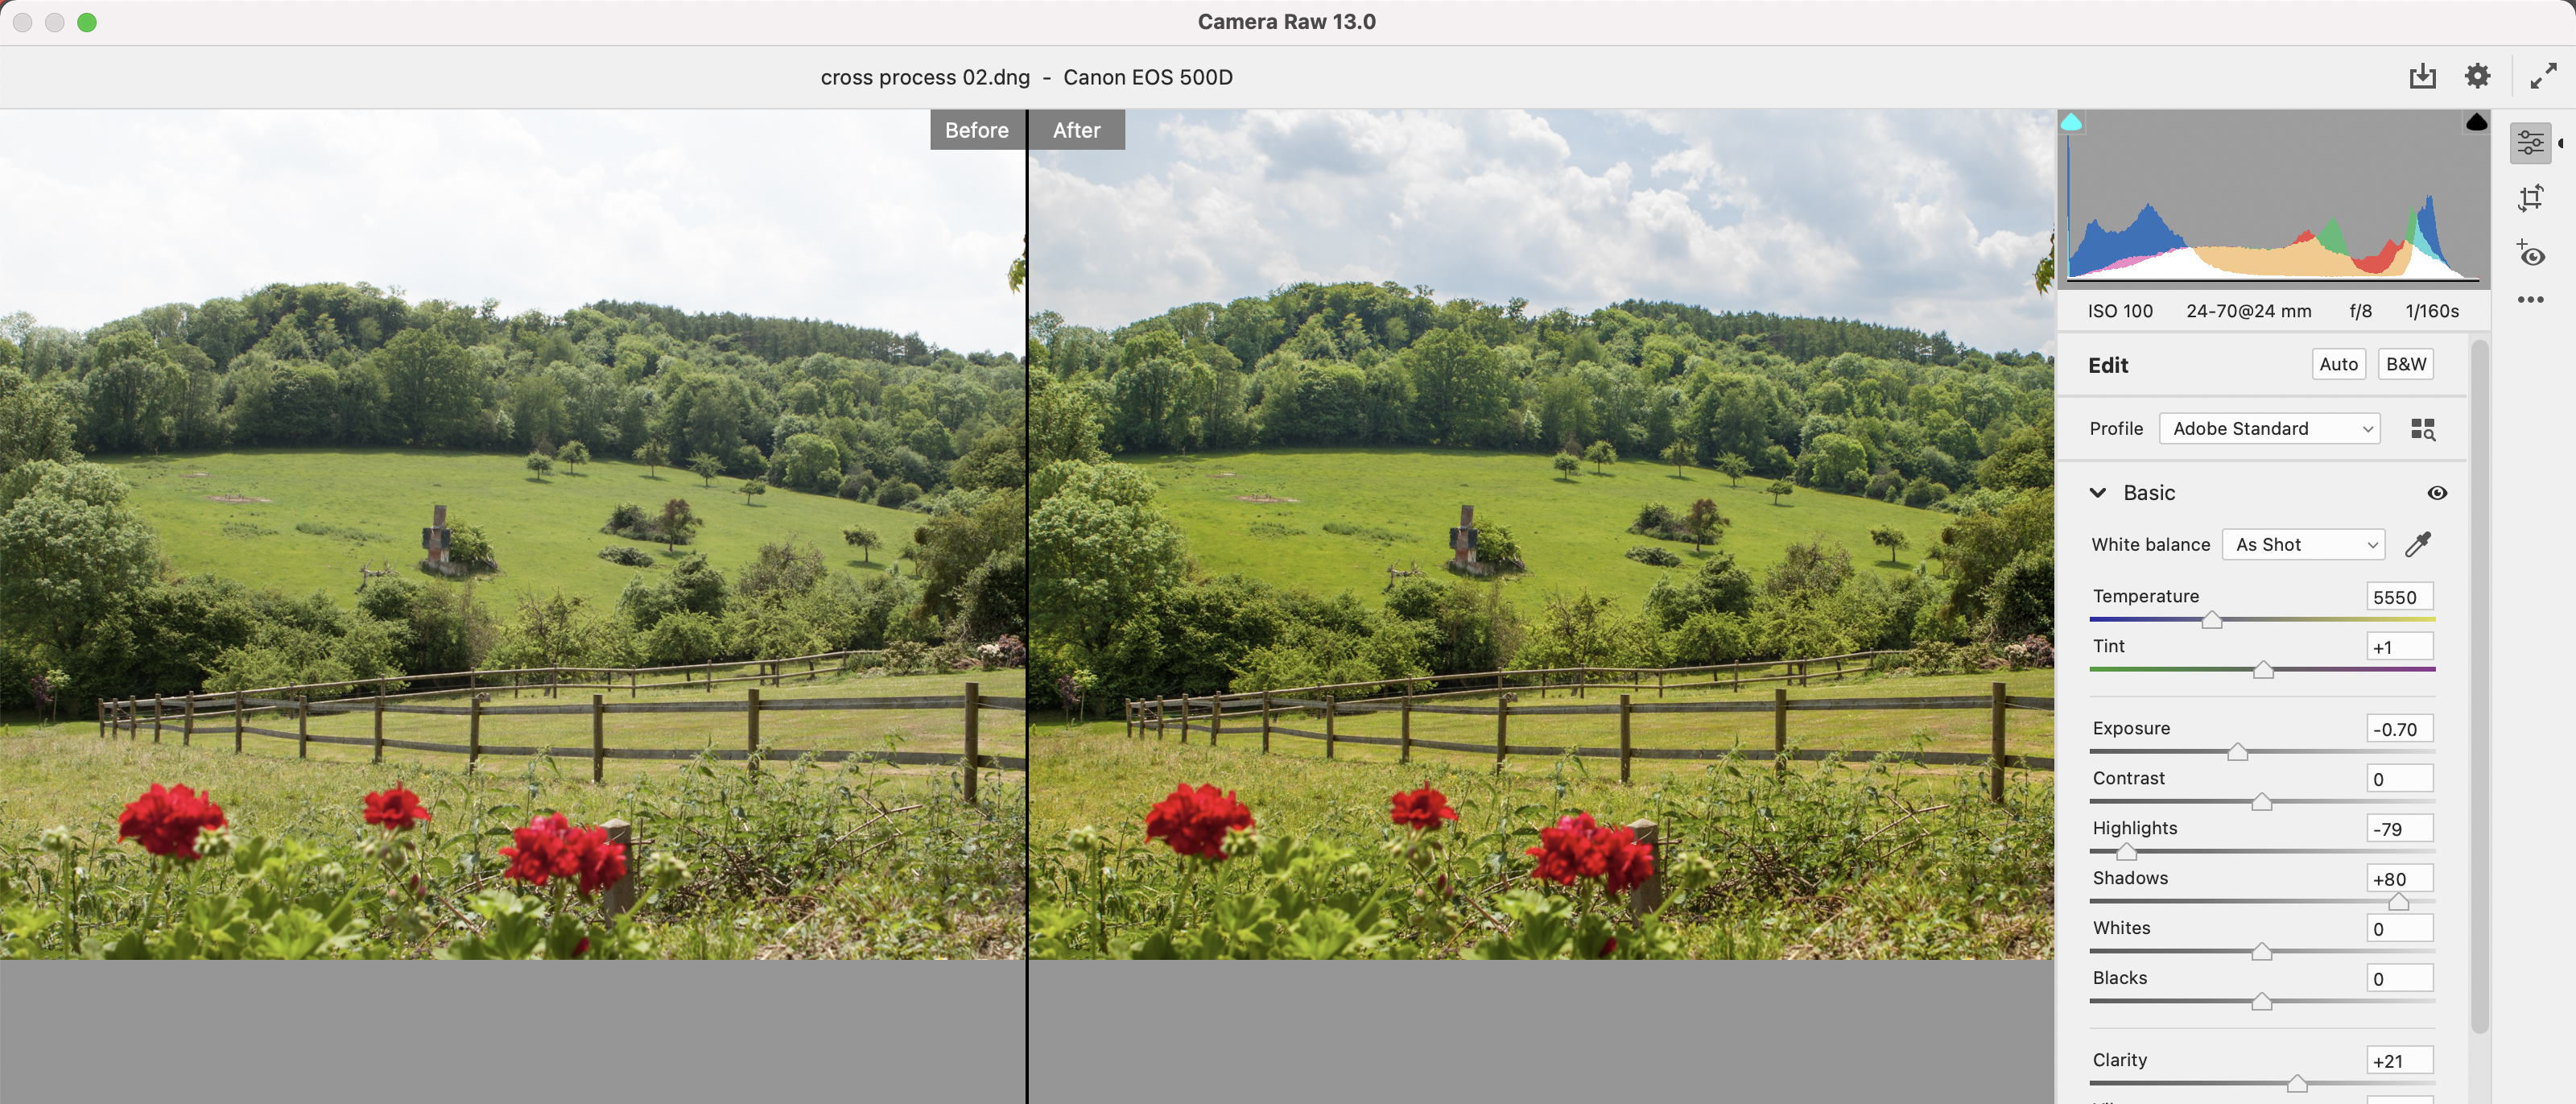 Adobe Photoshop Elements 2021 review | Digital Camera World